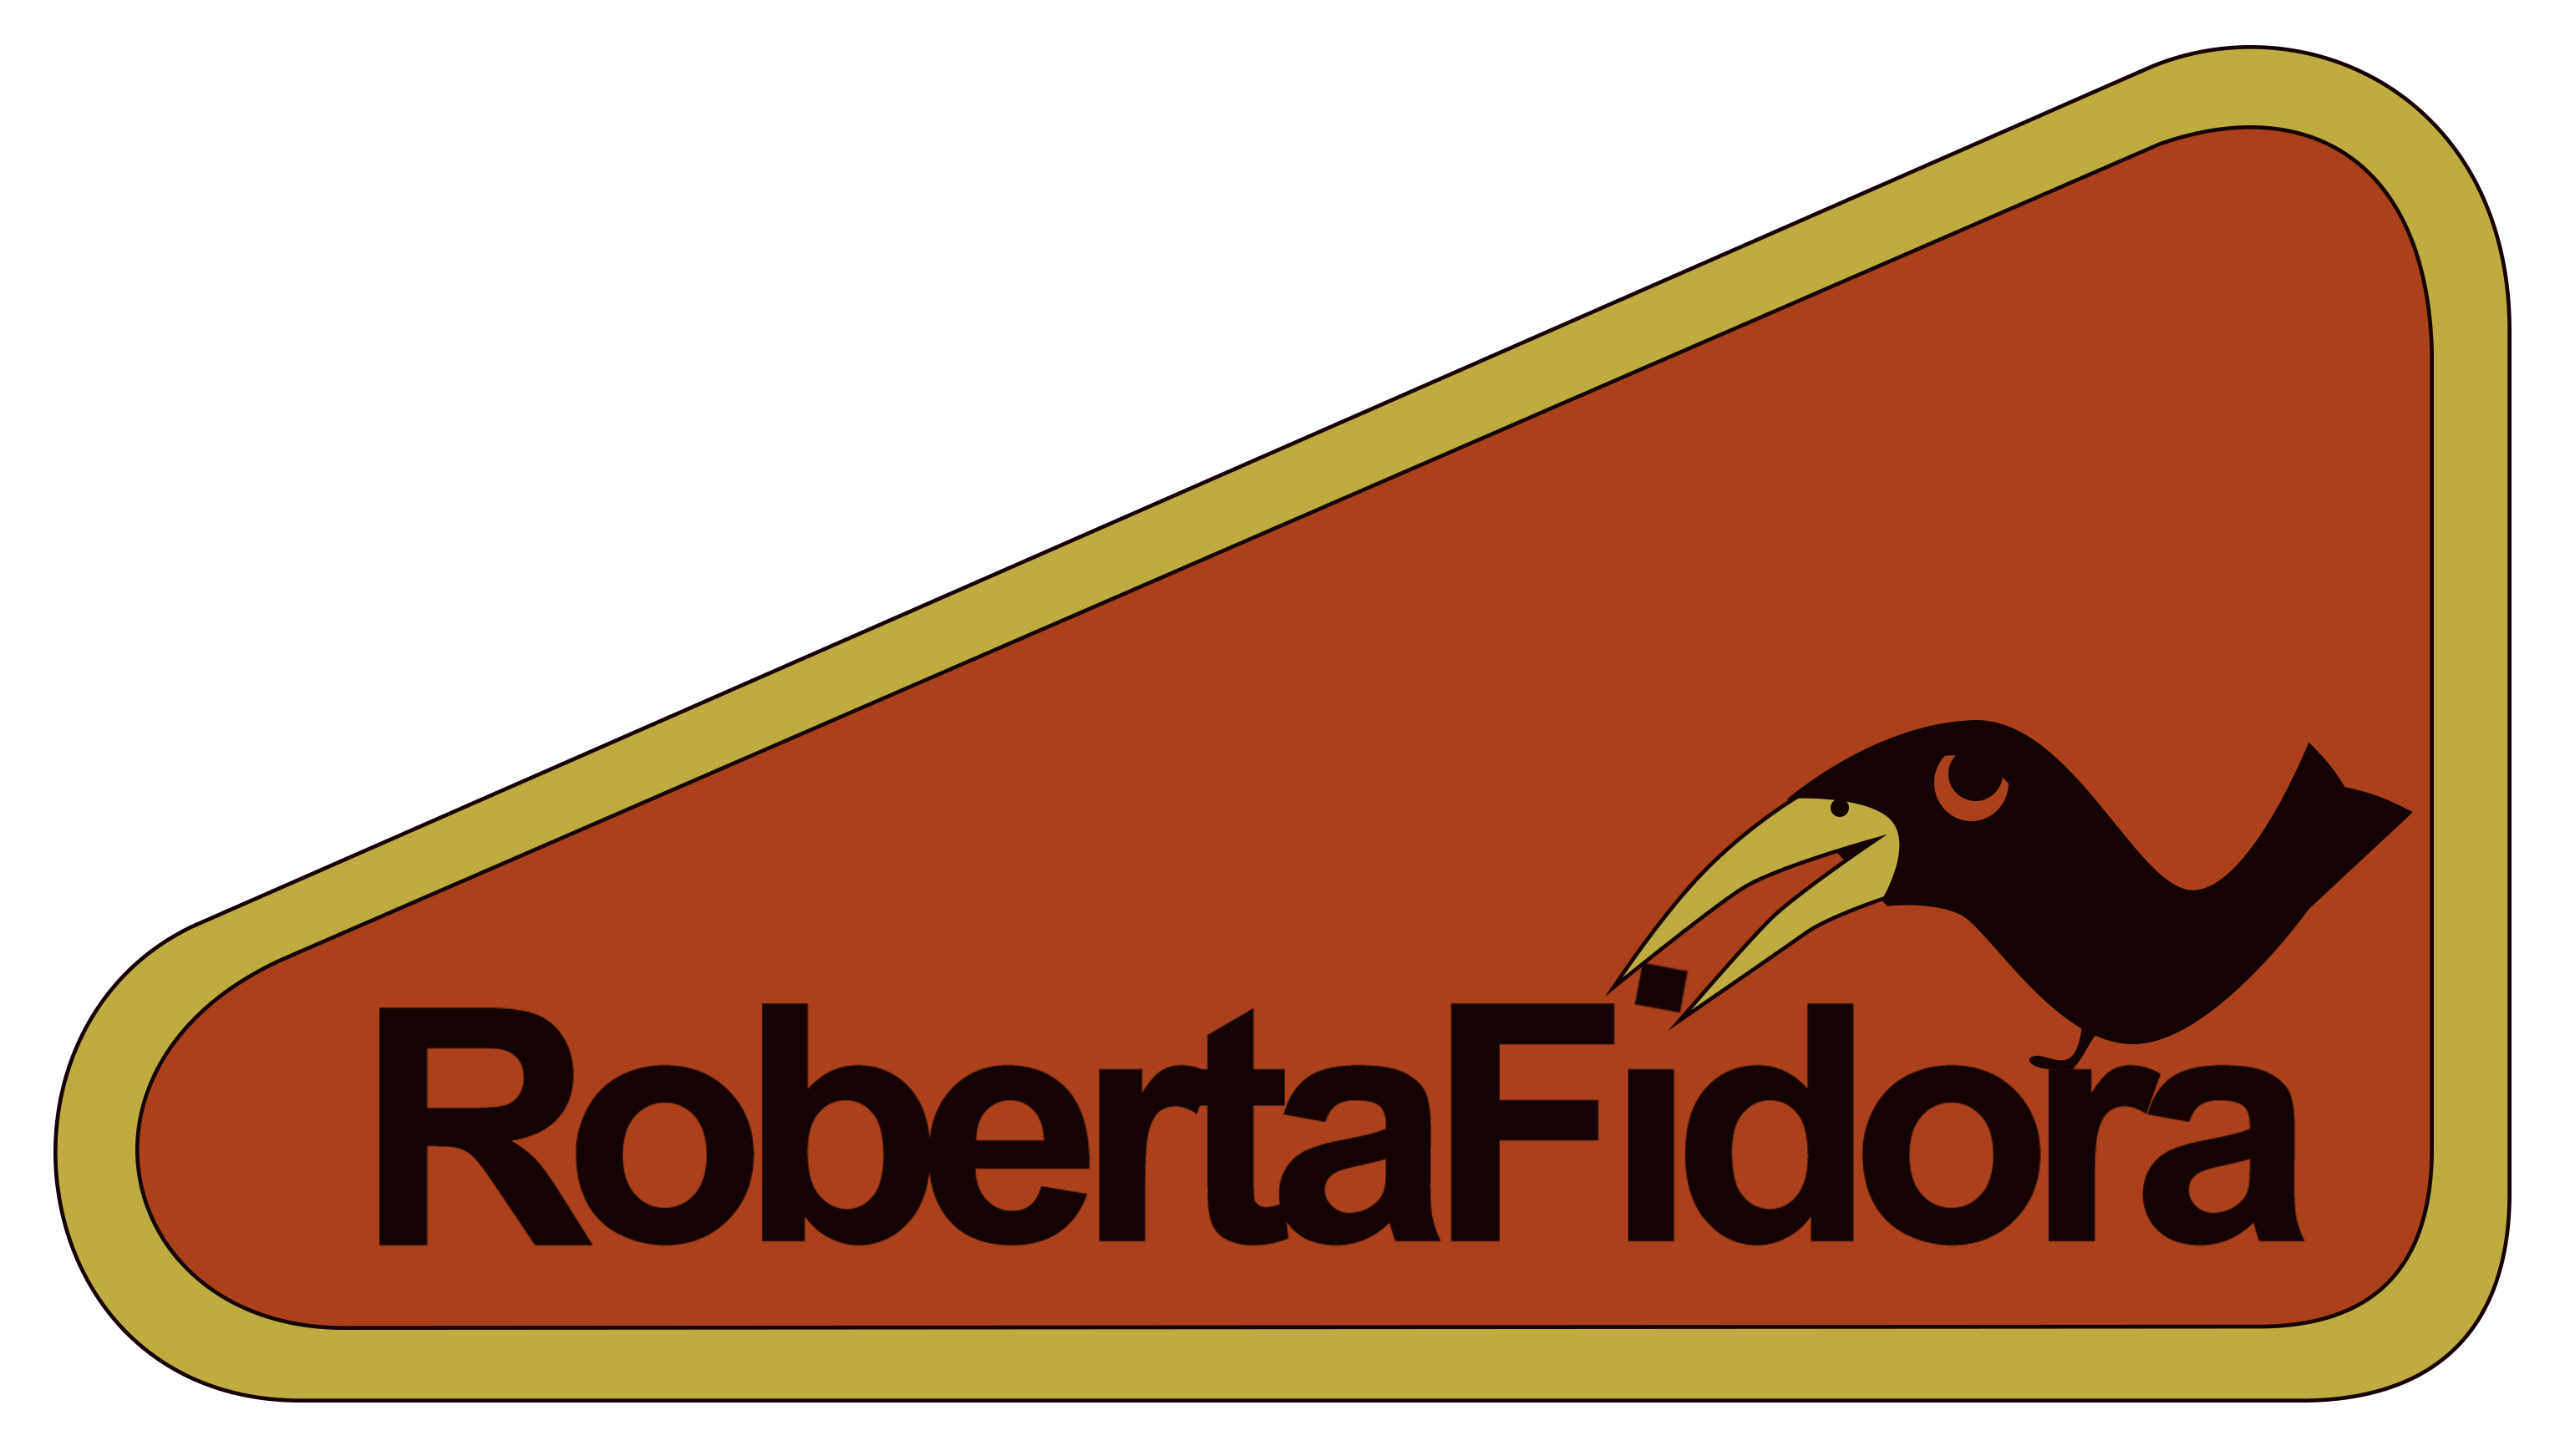 Roberta Fidora